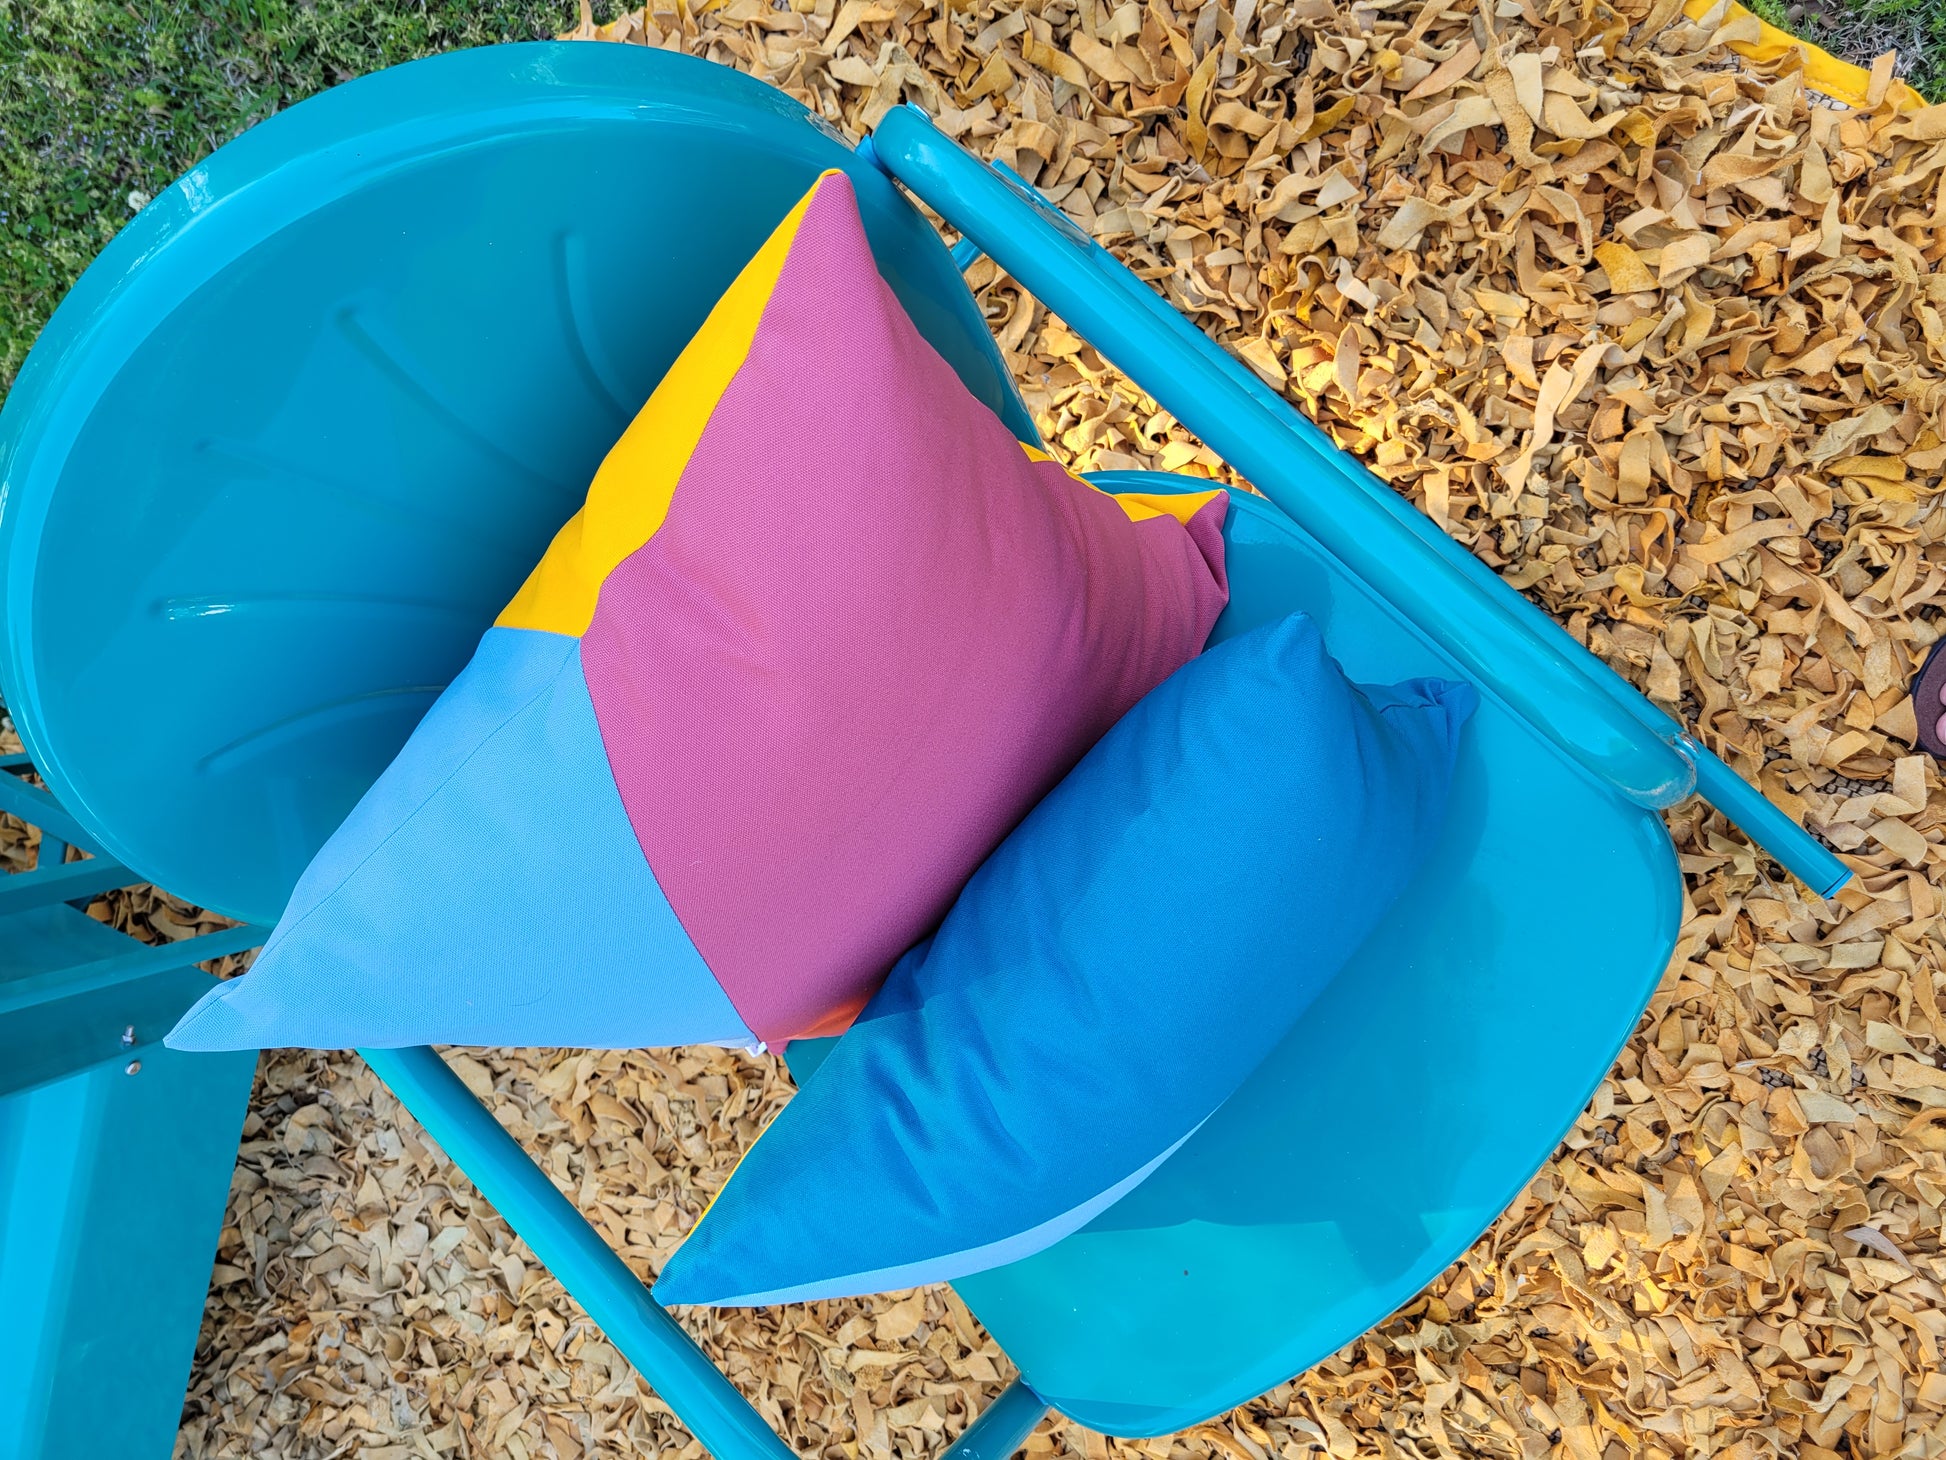 50s Mod Geometric Outdoor Throw Pillows